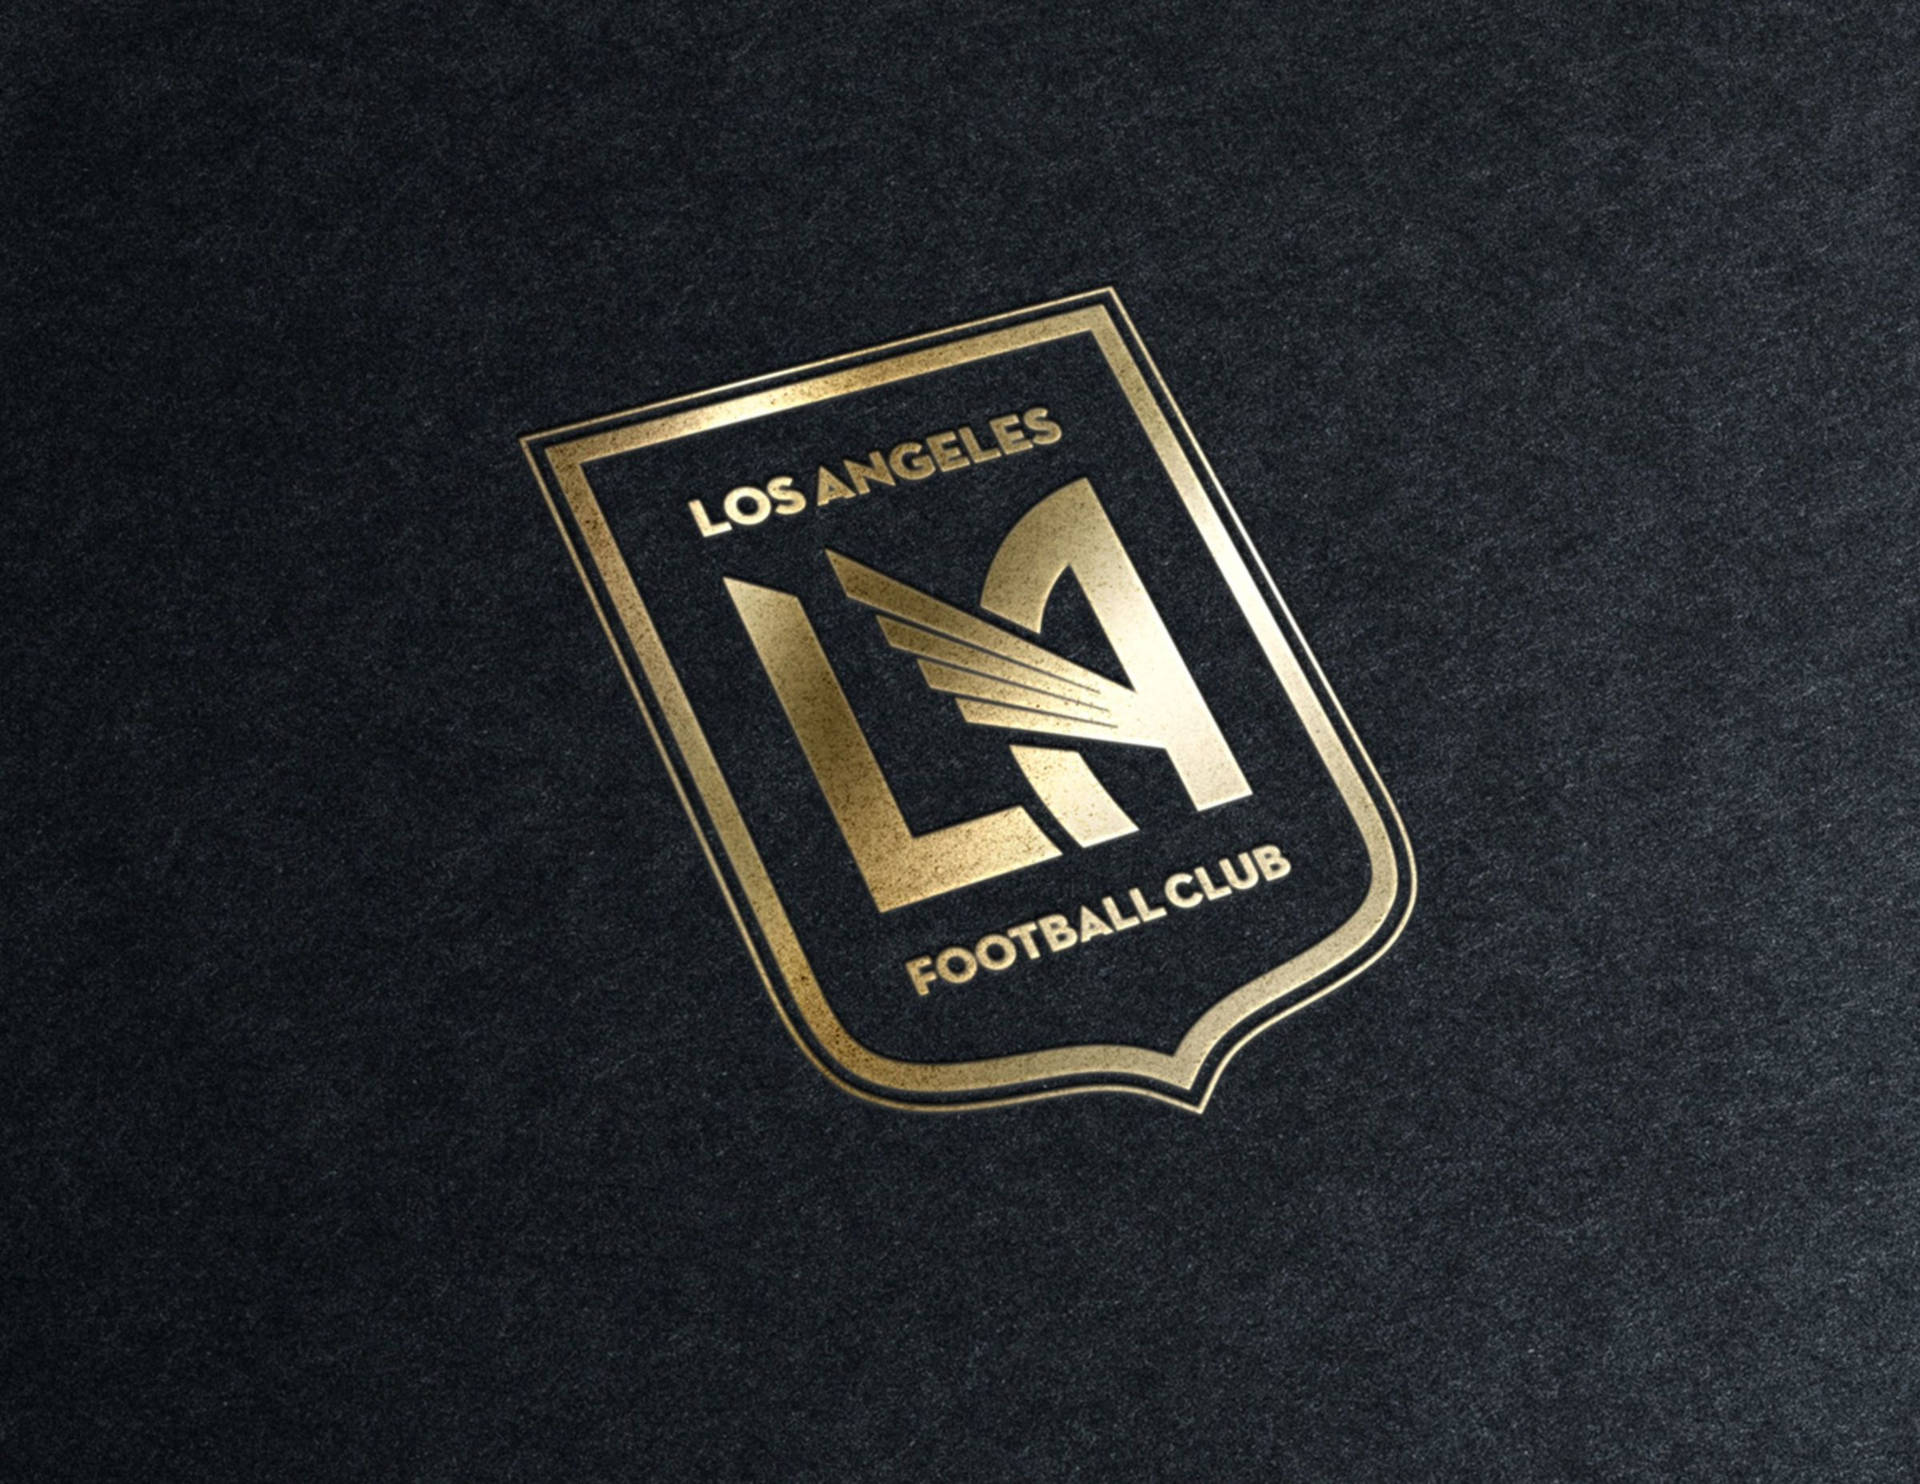 Lafc Gold Logo Embedded On Black Backdrop Background